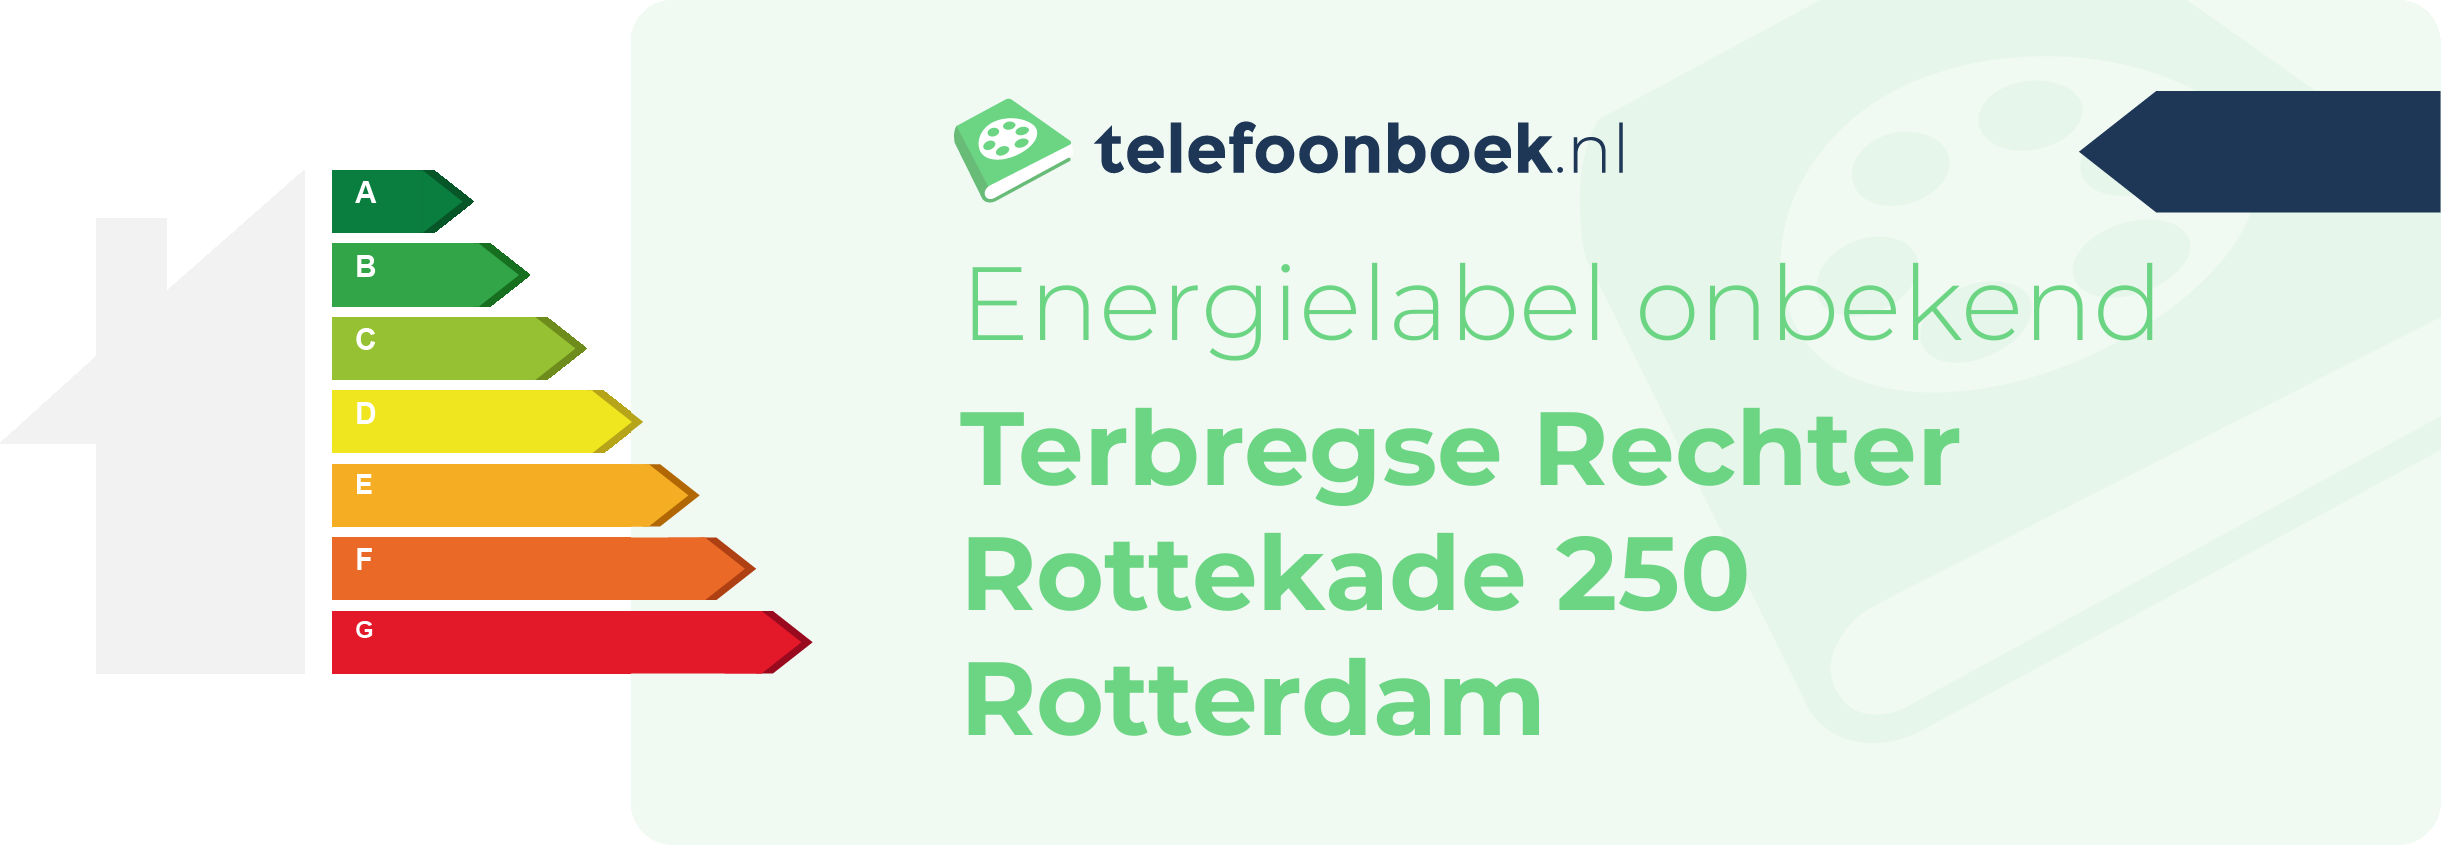 Energielabel Terbregse Rechter Rottekade 250 Rotterdam